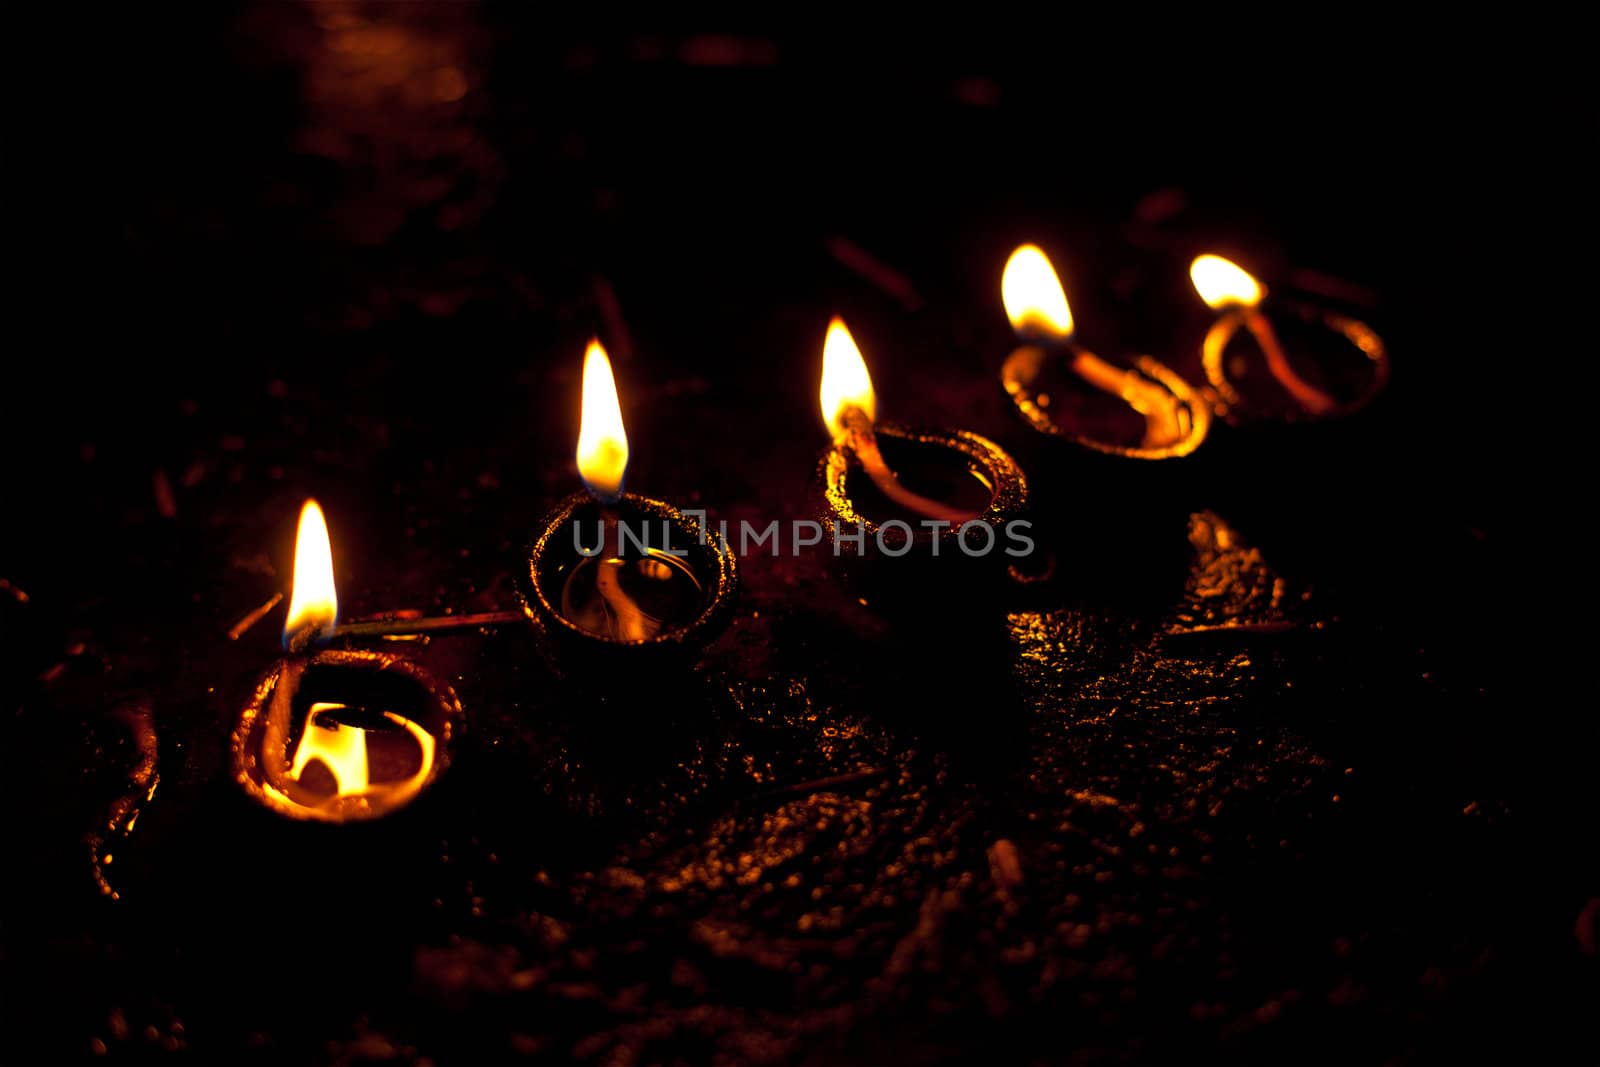 Diwali lights. India